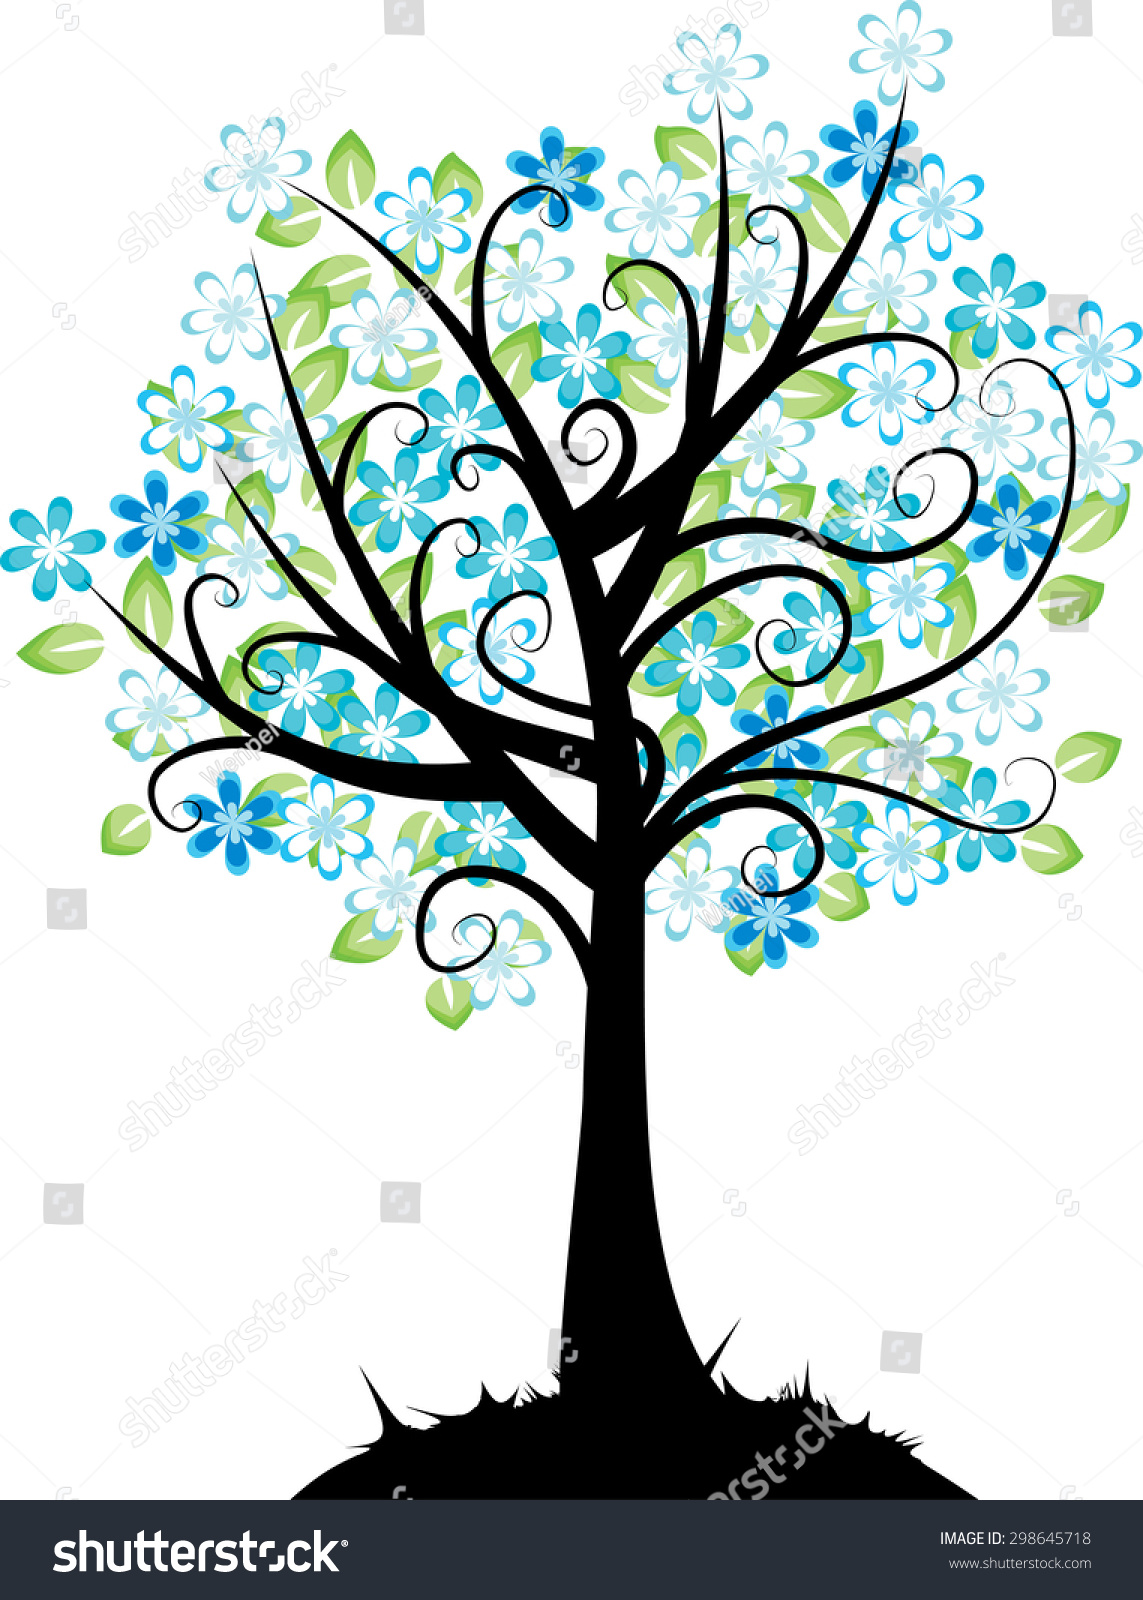 Vector Flower Tree - 298645718 : Shutterstock